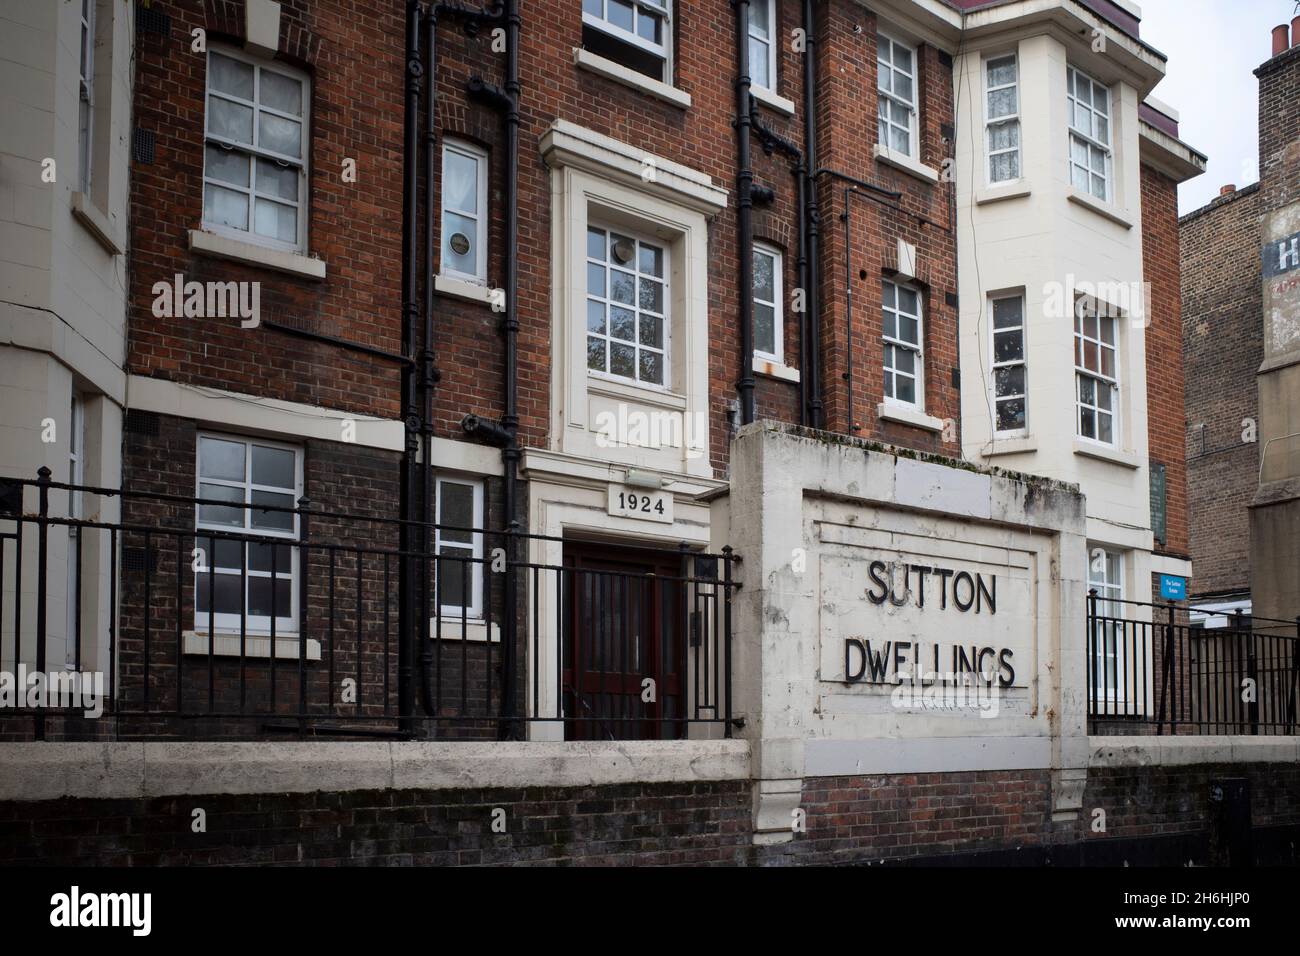 Sutton Dwellings, Upper Street, Islington, London Stock Photo